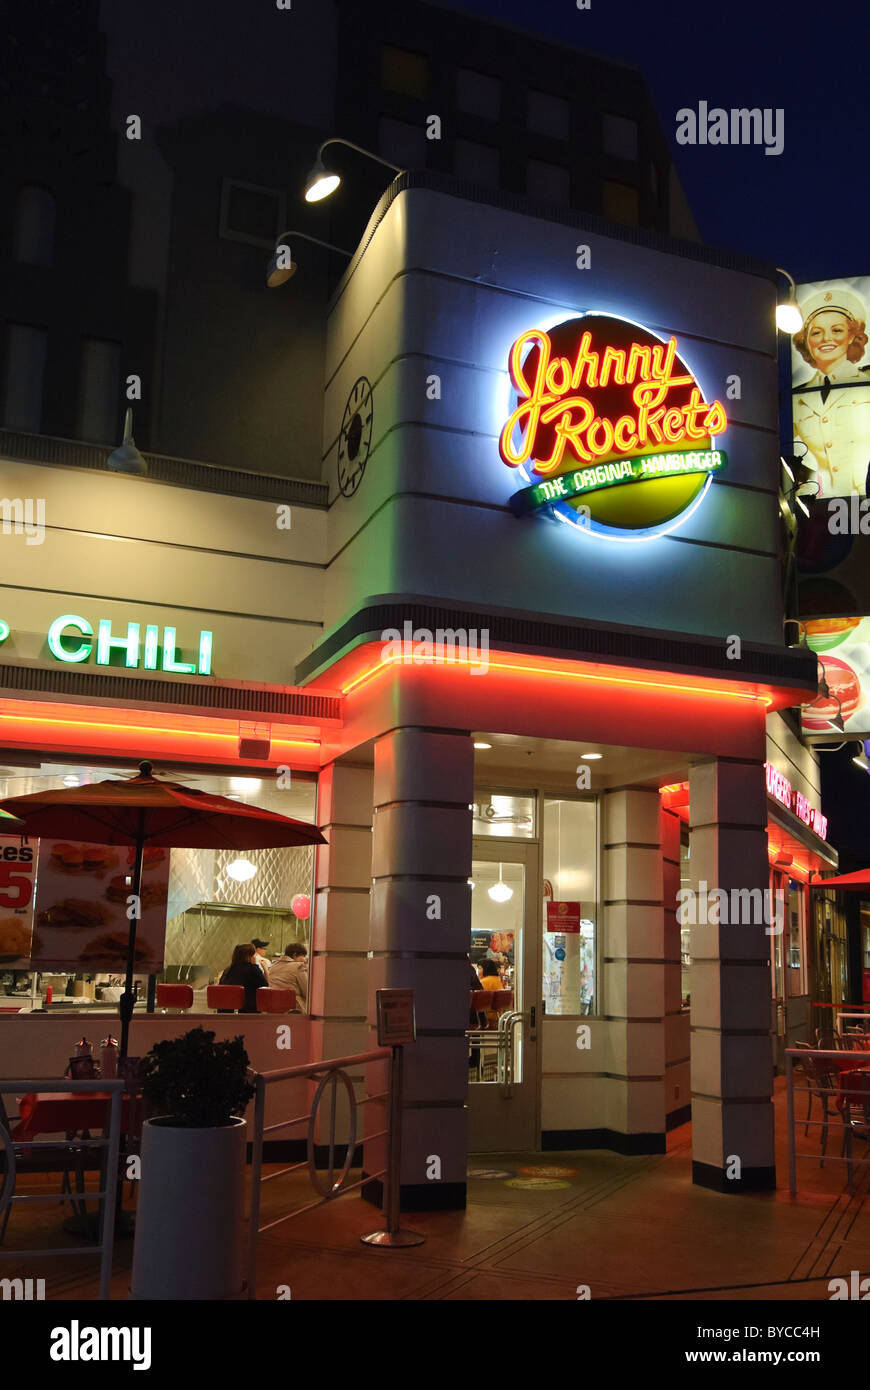 Johnny Rockets restaurant at night. Stock Photo